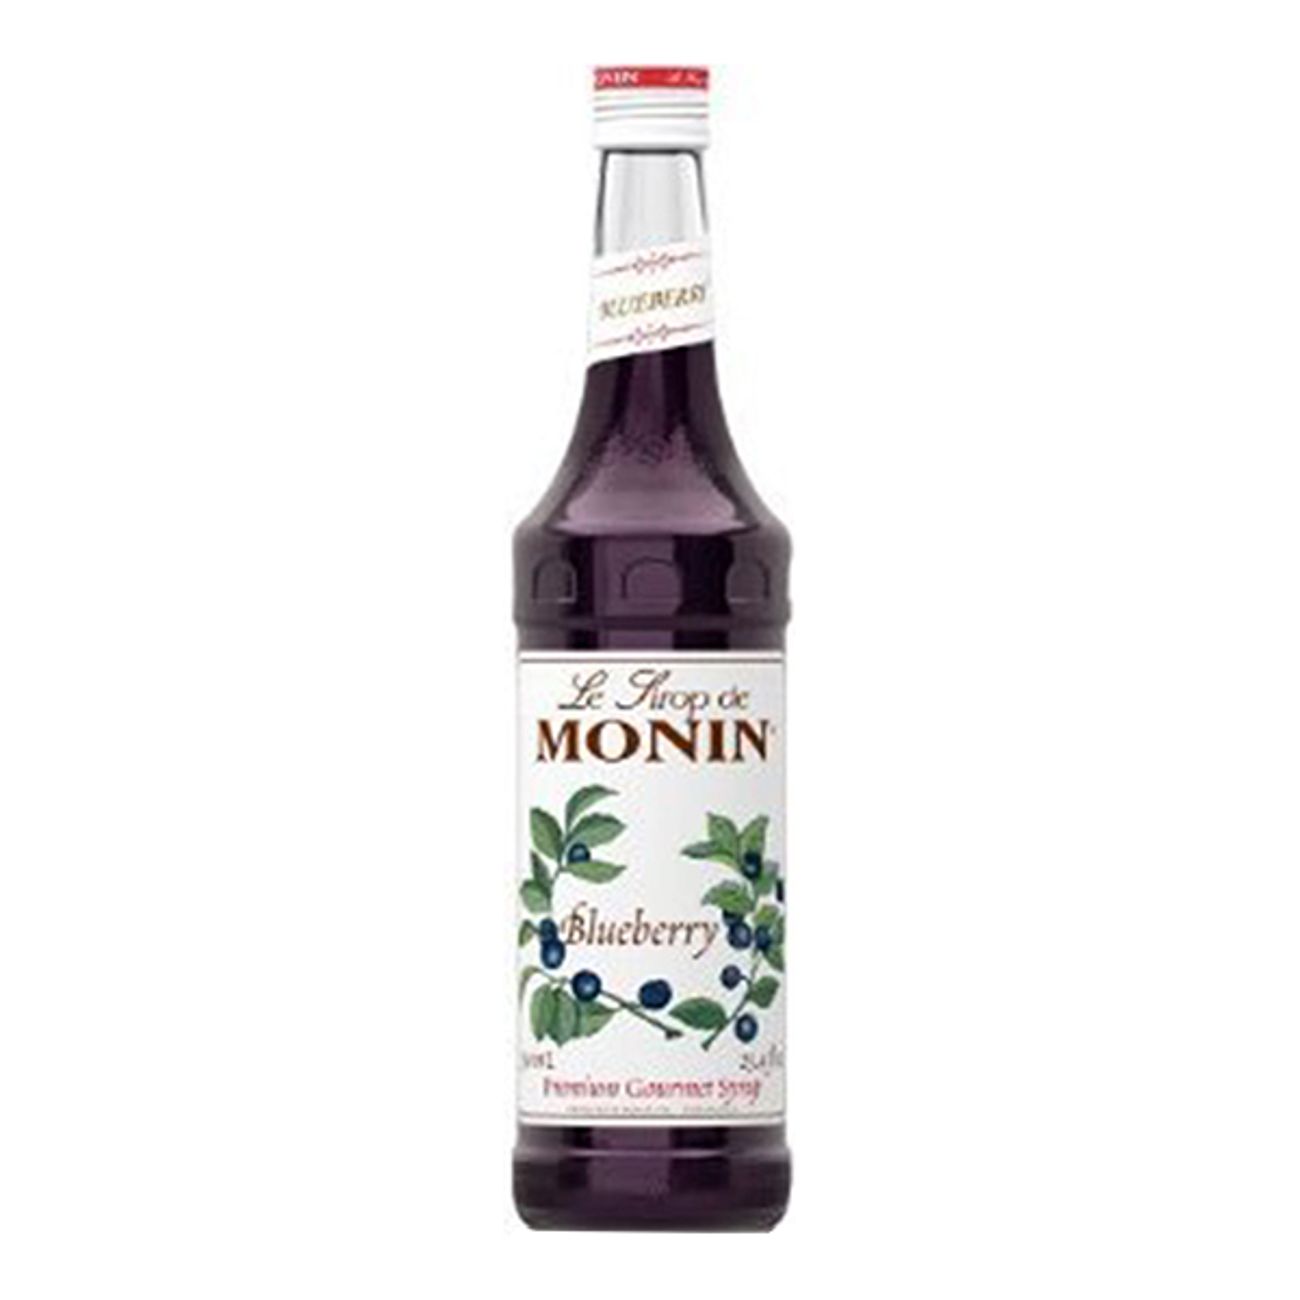 monin-blabar-drinkmix-1